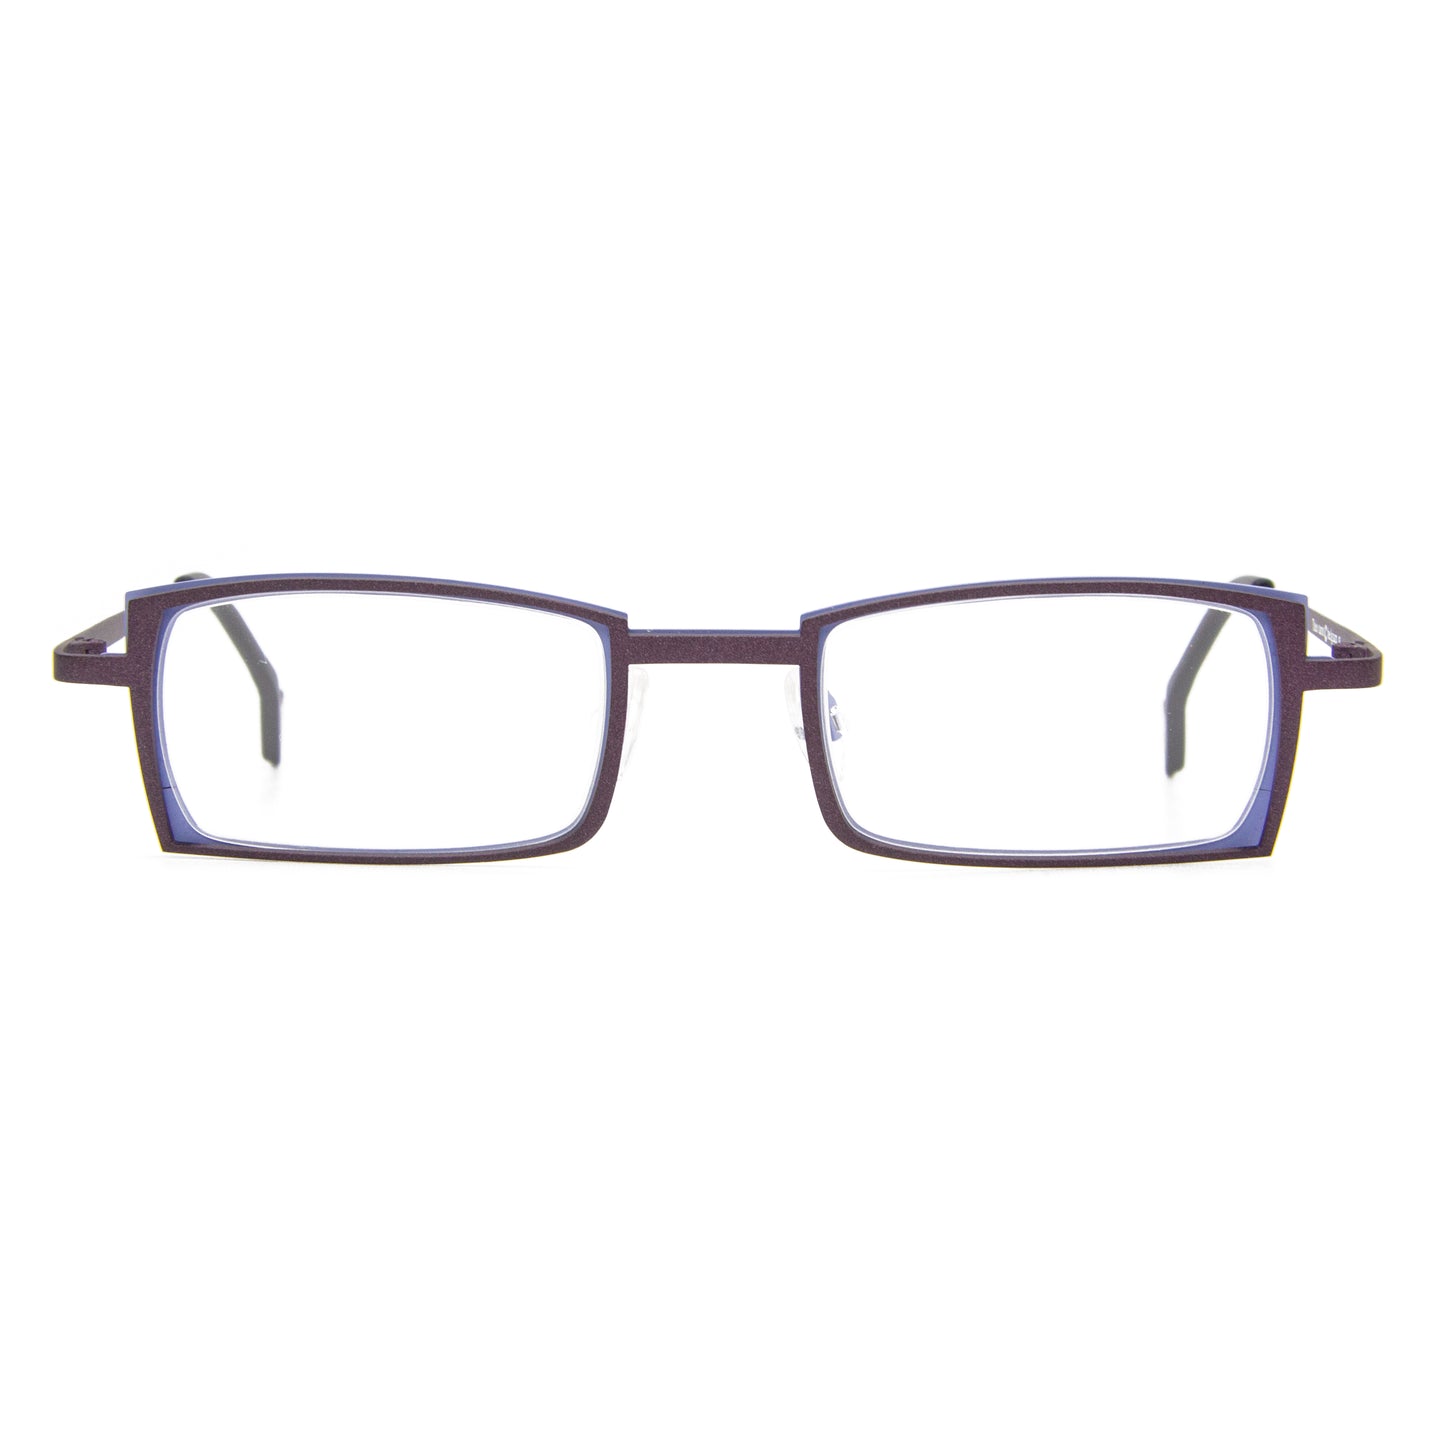 Theo - Eyewear - Tarot - 244 - Glasses